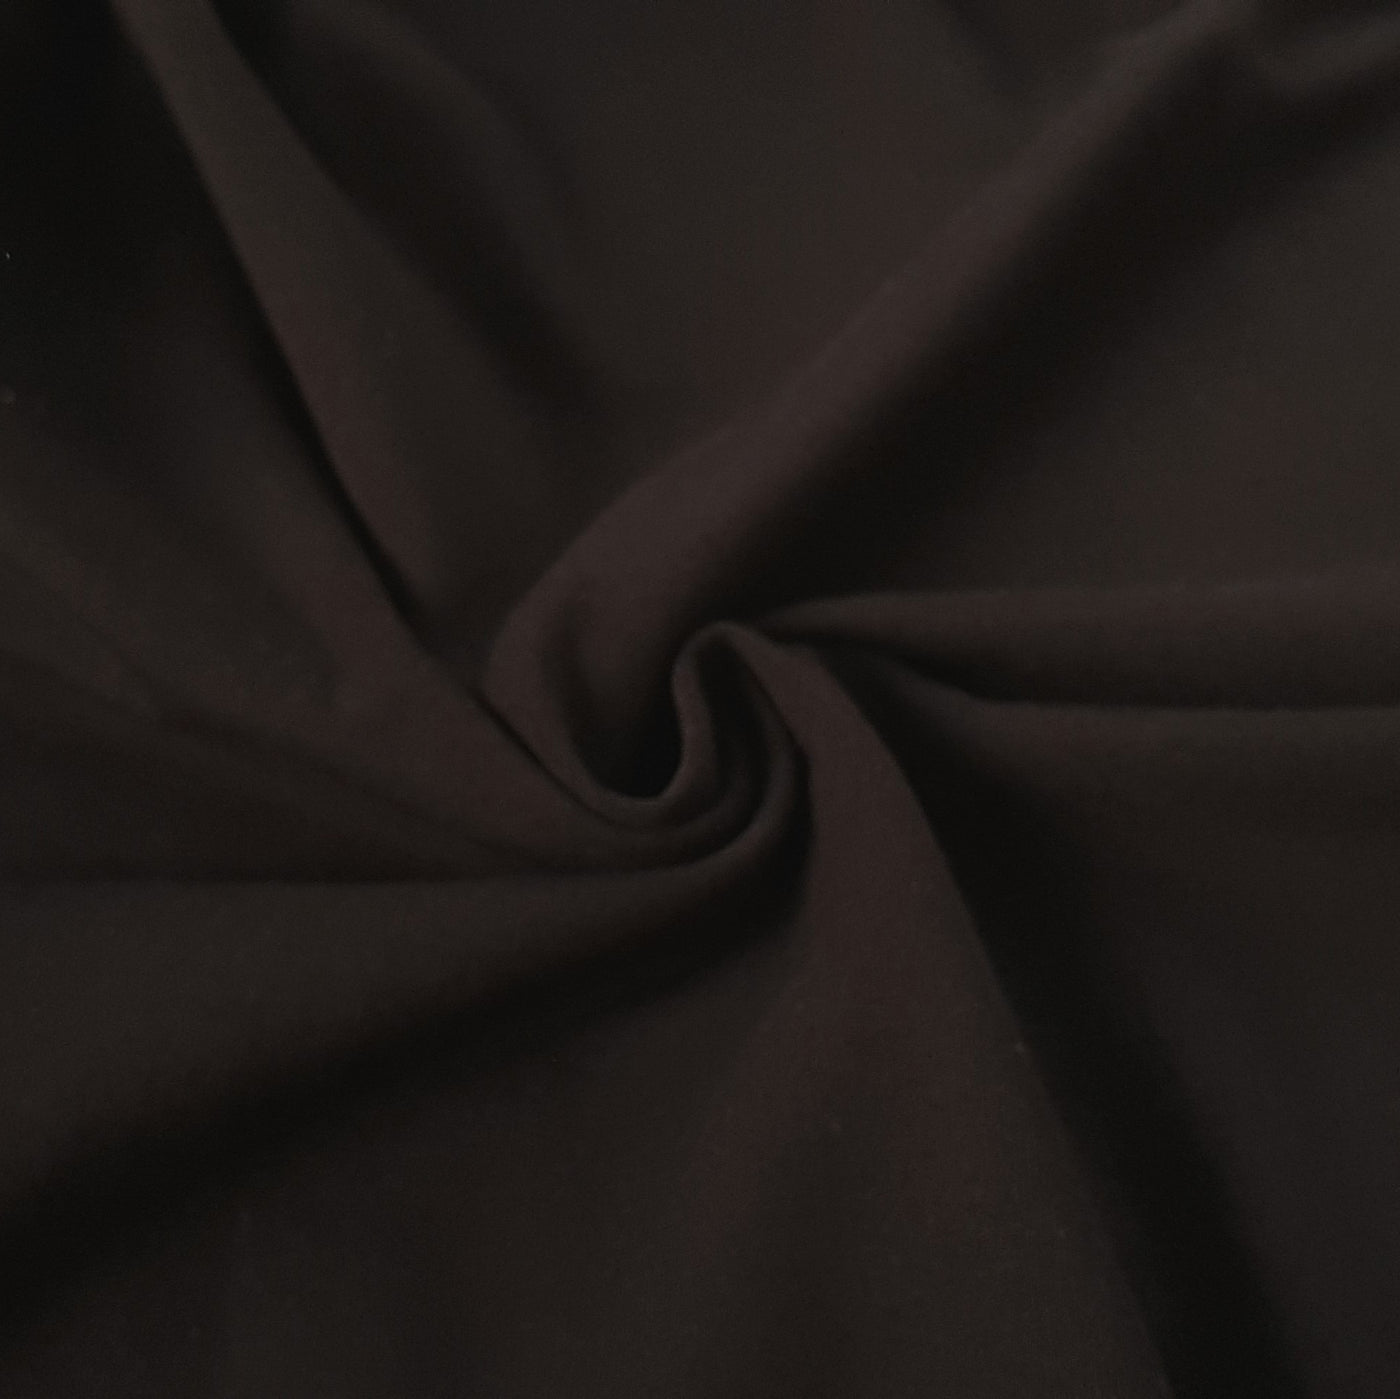 Solid Plain Cotton Spandex Dress Jersey stretch Knit Oeko-Tex Fabric.